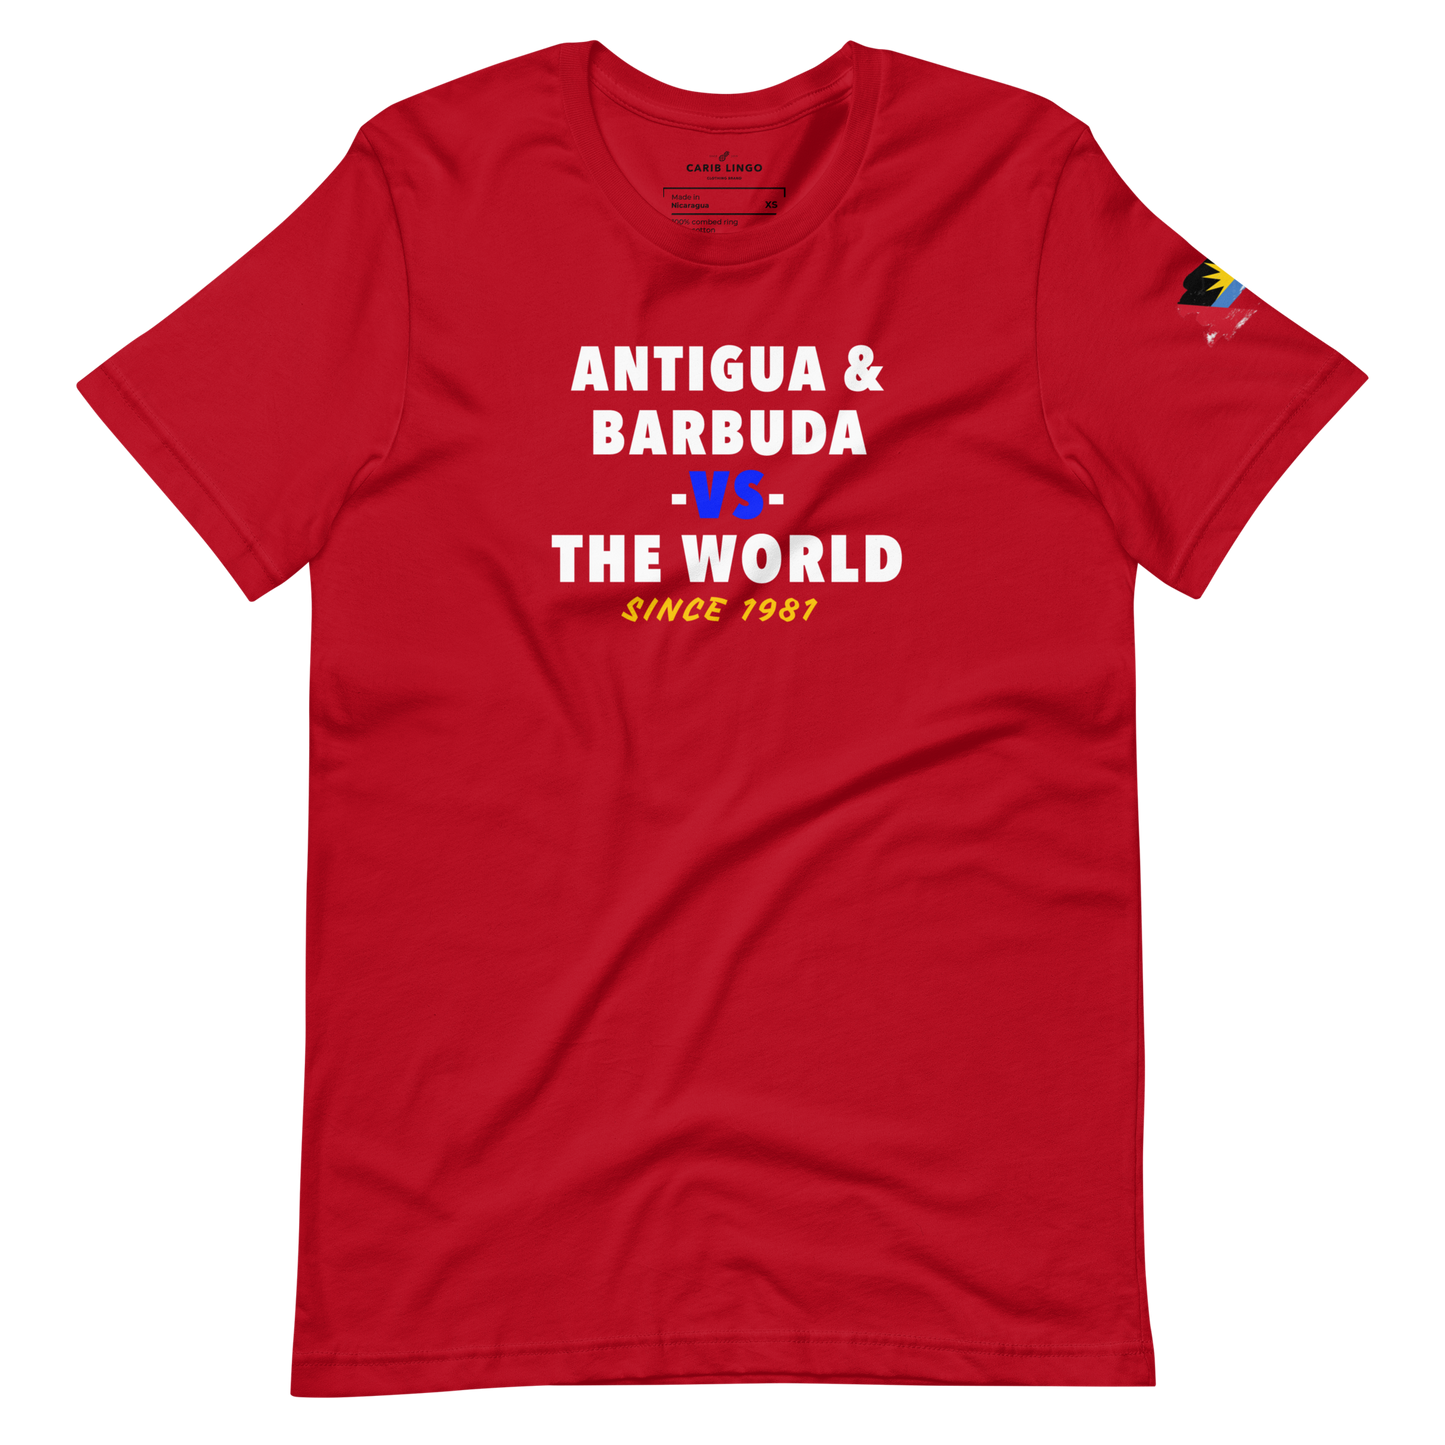 Antigua & Barbuda -vs- The World Unisex t-shirt